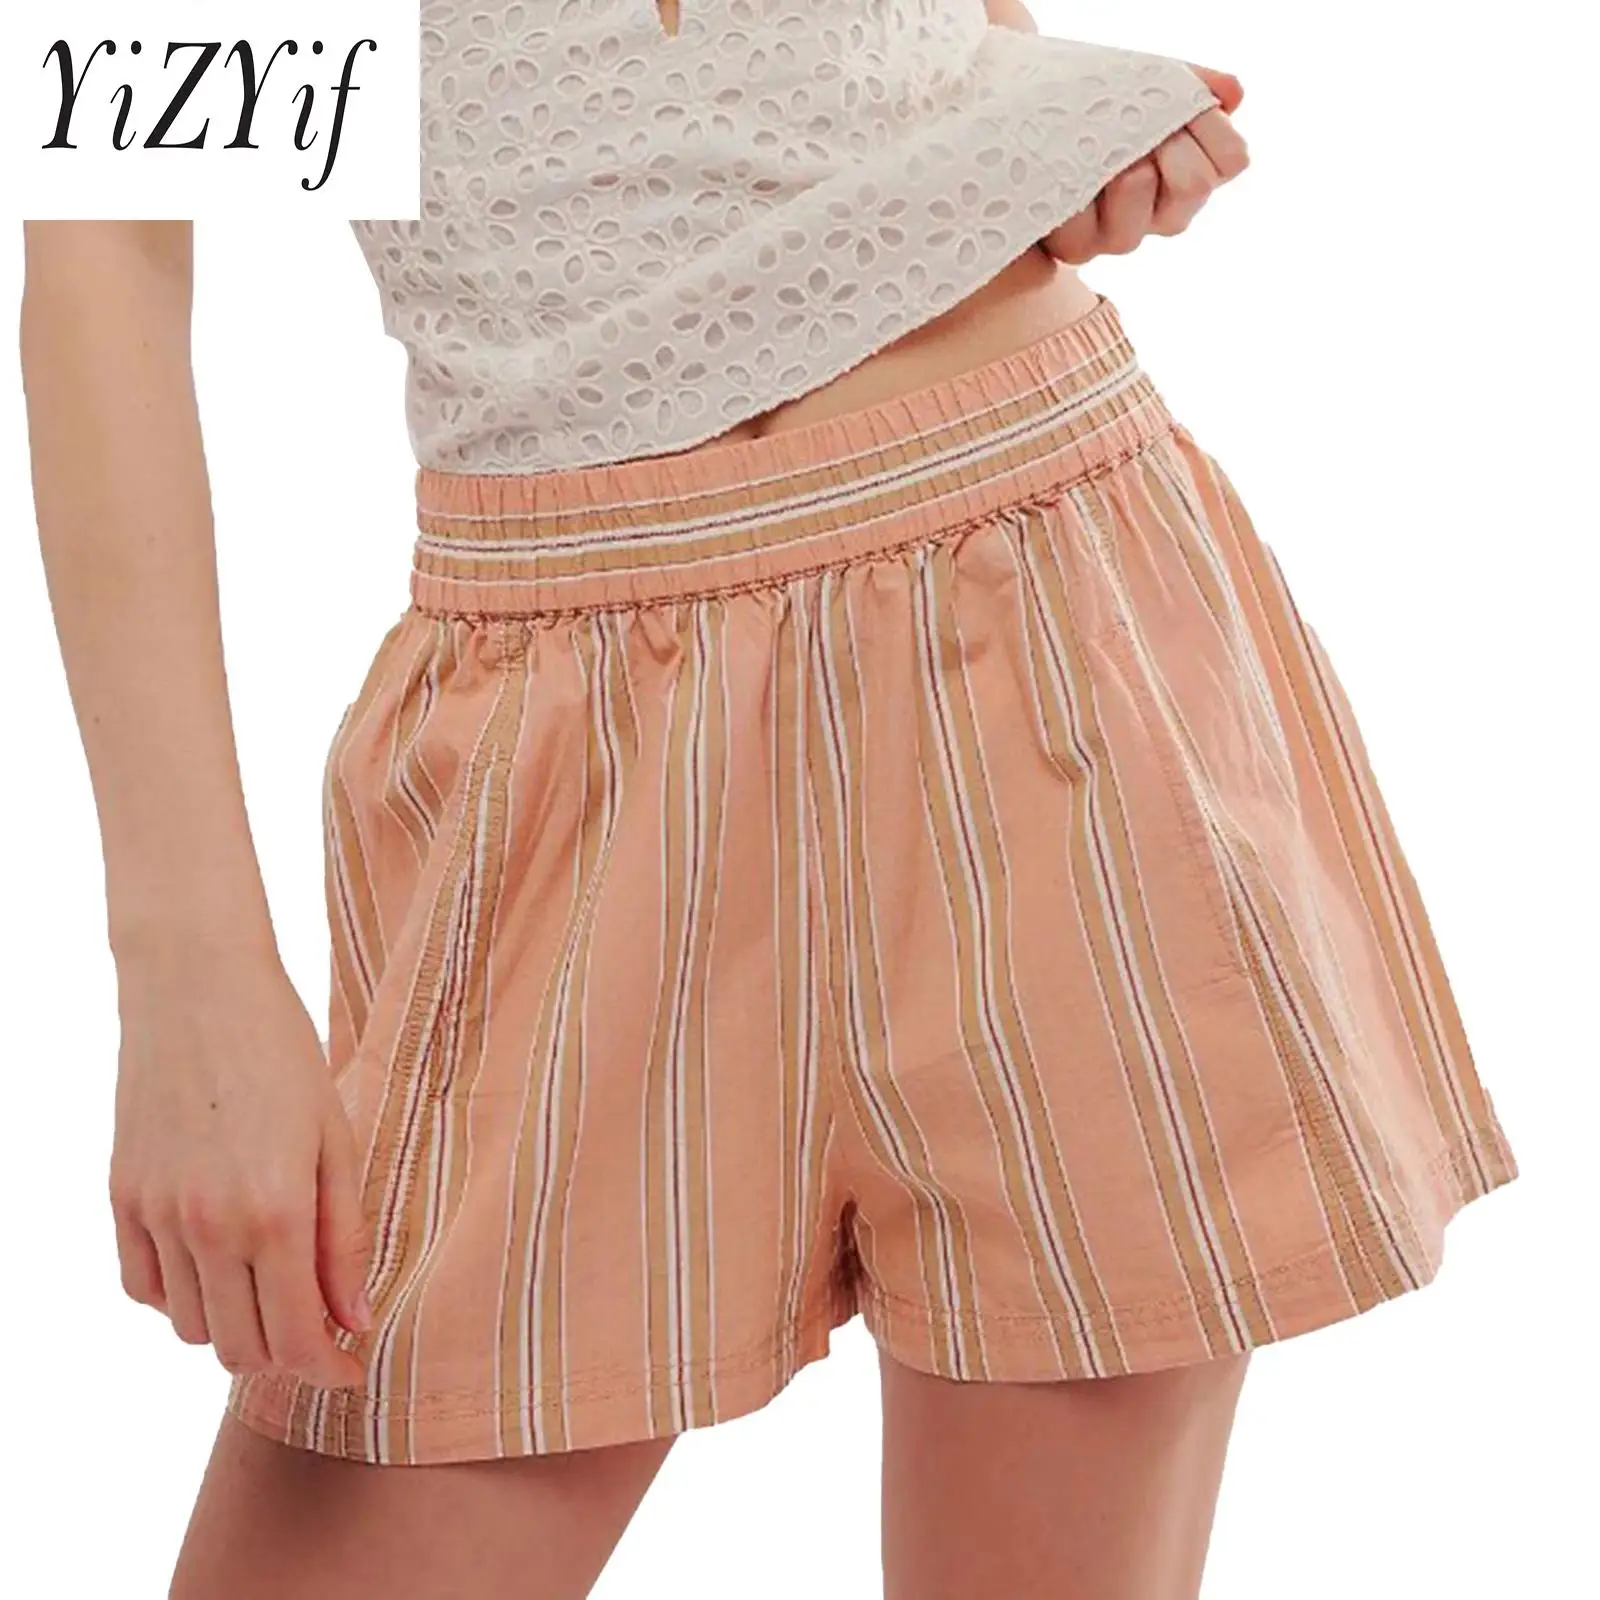 

YiZYiF Womens Contrast Color Striped Shorts Casual High Waist Elastic Waistband Panties with 2 Pockets for Homewear Sleepwear